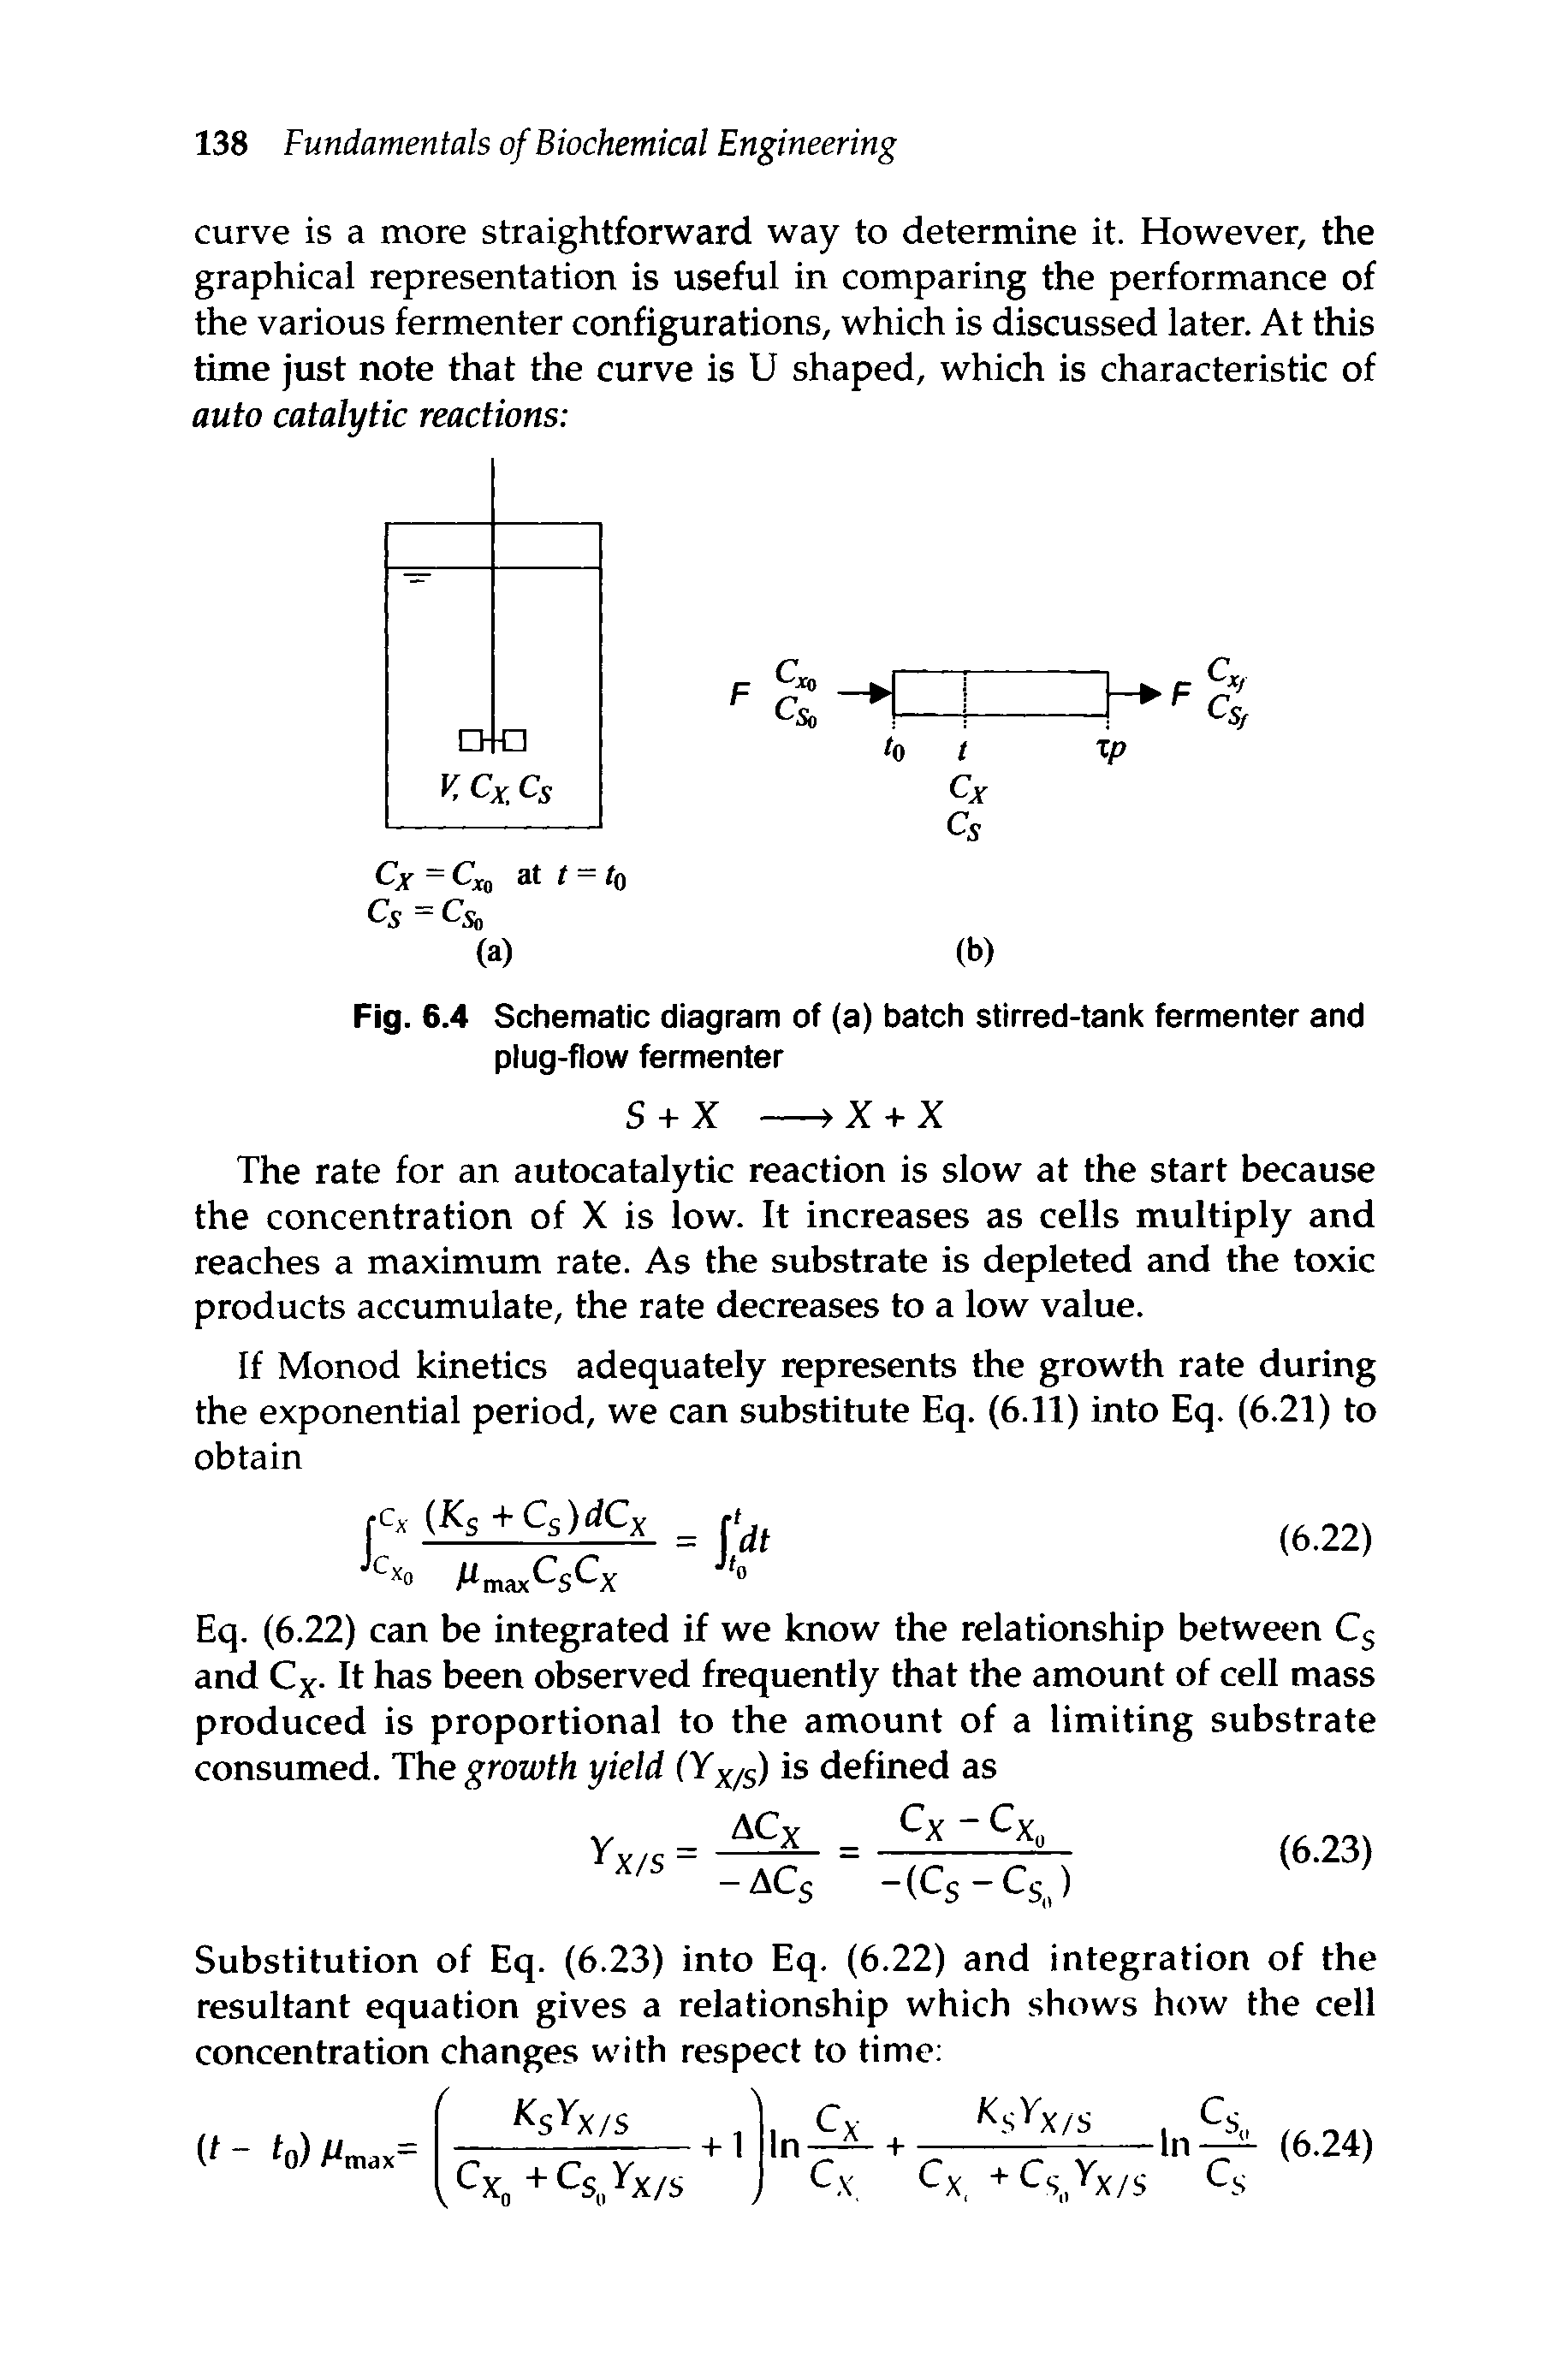 Fig. 6.4 Schematic diagram of (a) batch stirred-tank fermenter and plug-flow fermenter...